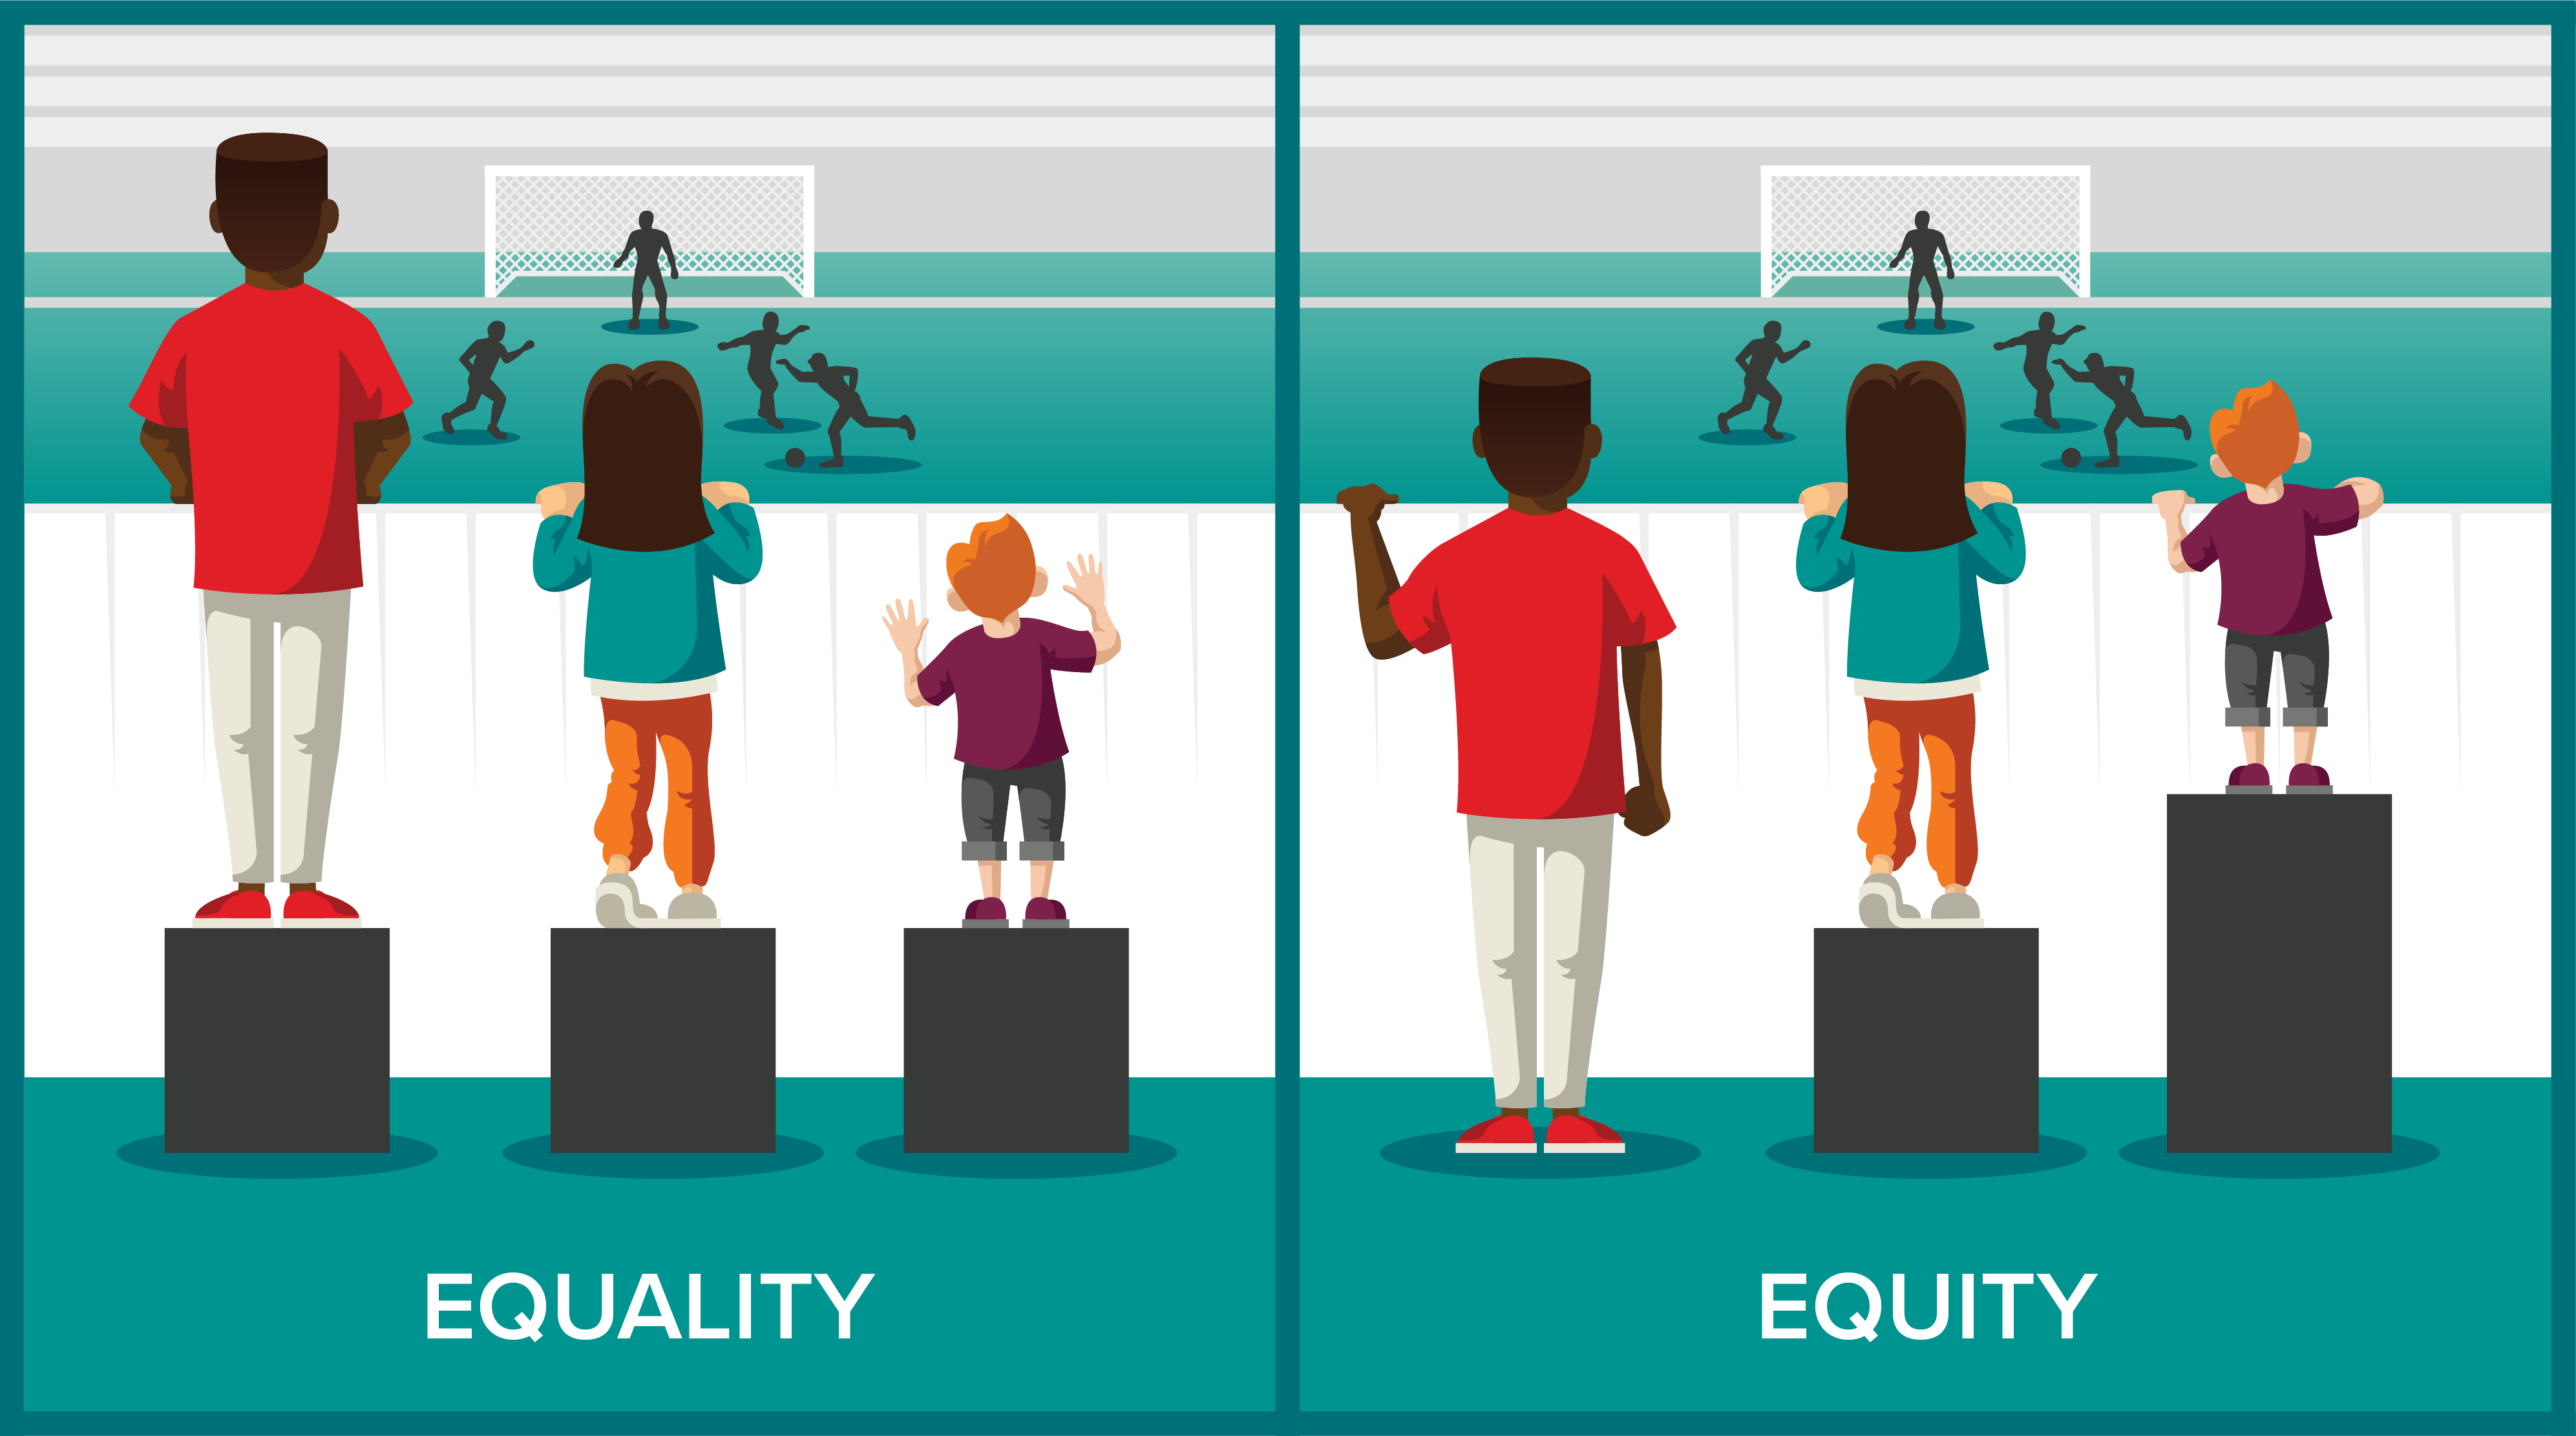 visual representation of equality